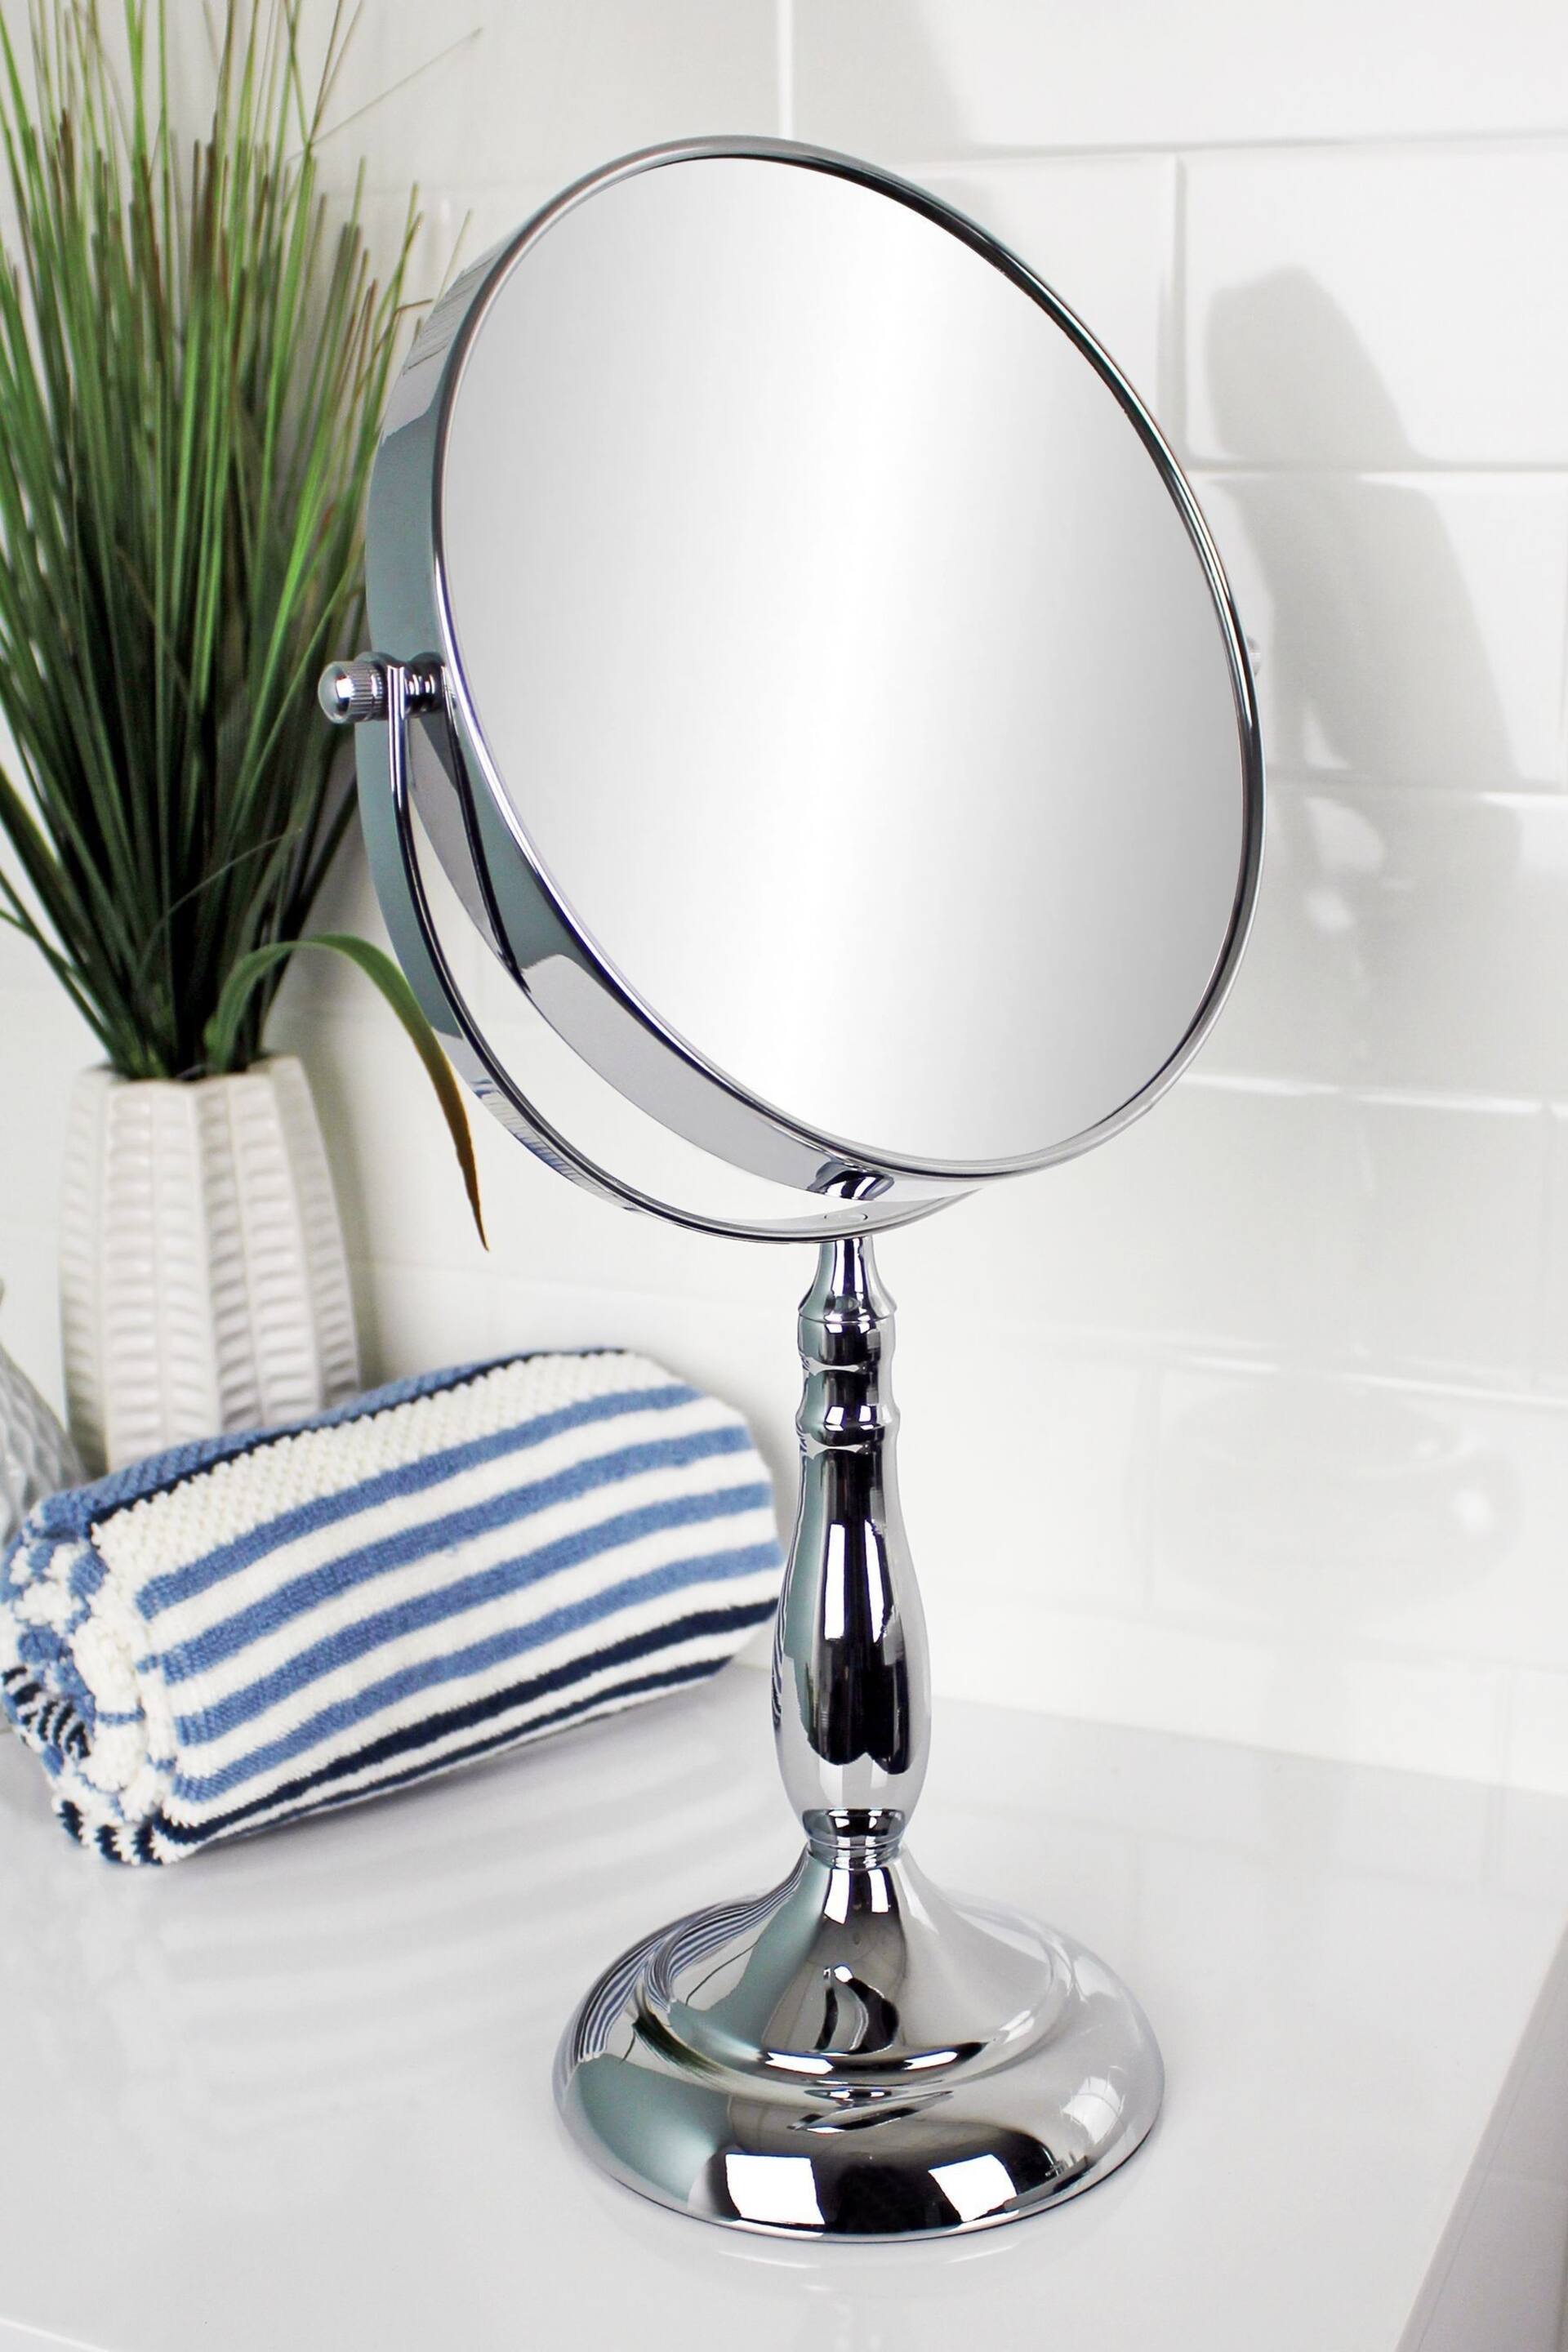 Showerdrape Chrome Vanity Mirror Round 7x Magnification Reversable Vidos - Image 1 of 2